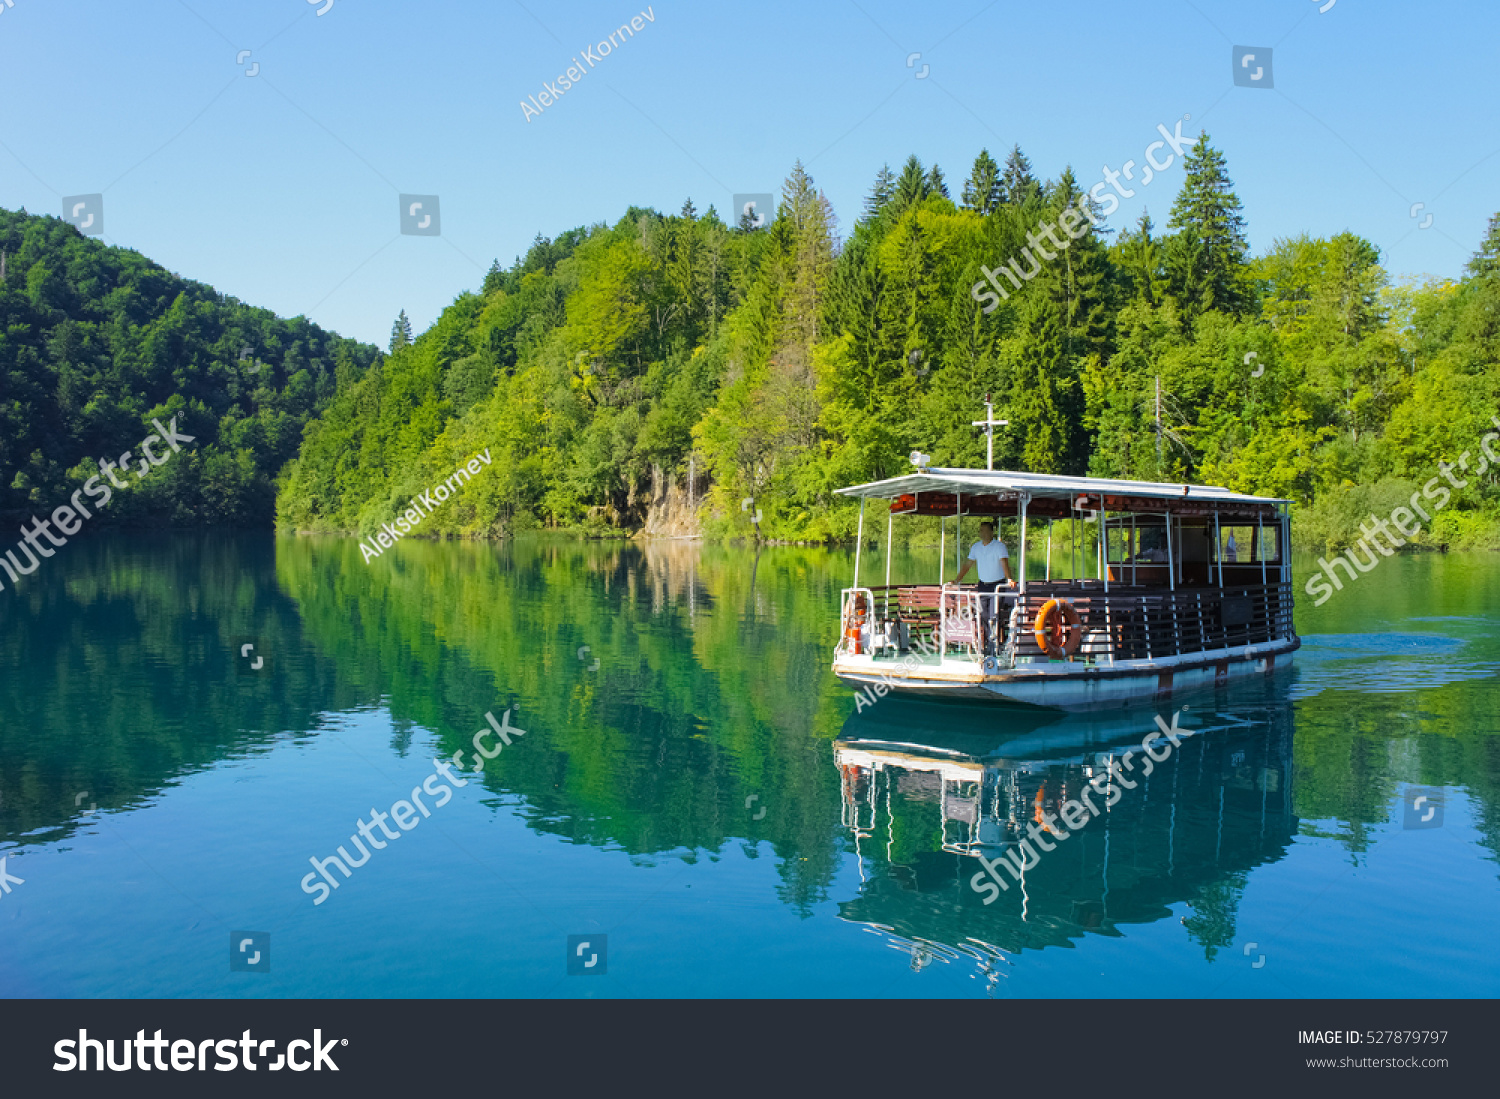 River boat at Plitvice Lakes National Park, Croatia.  #527879797